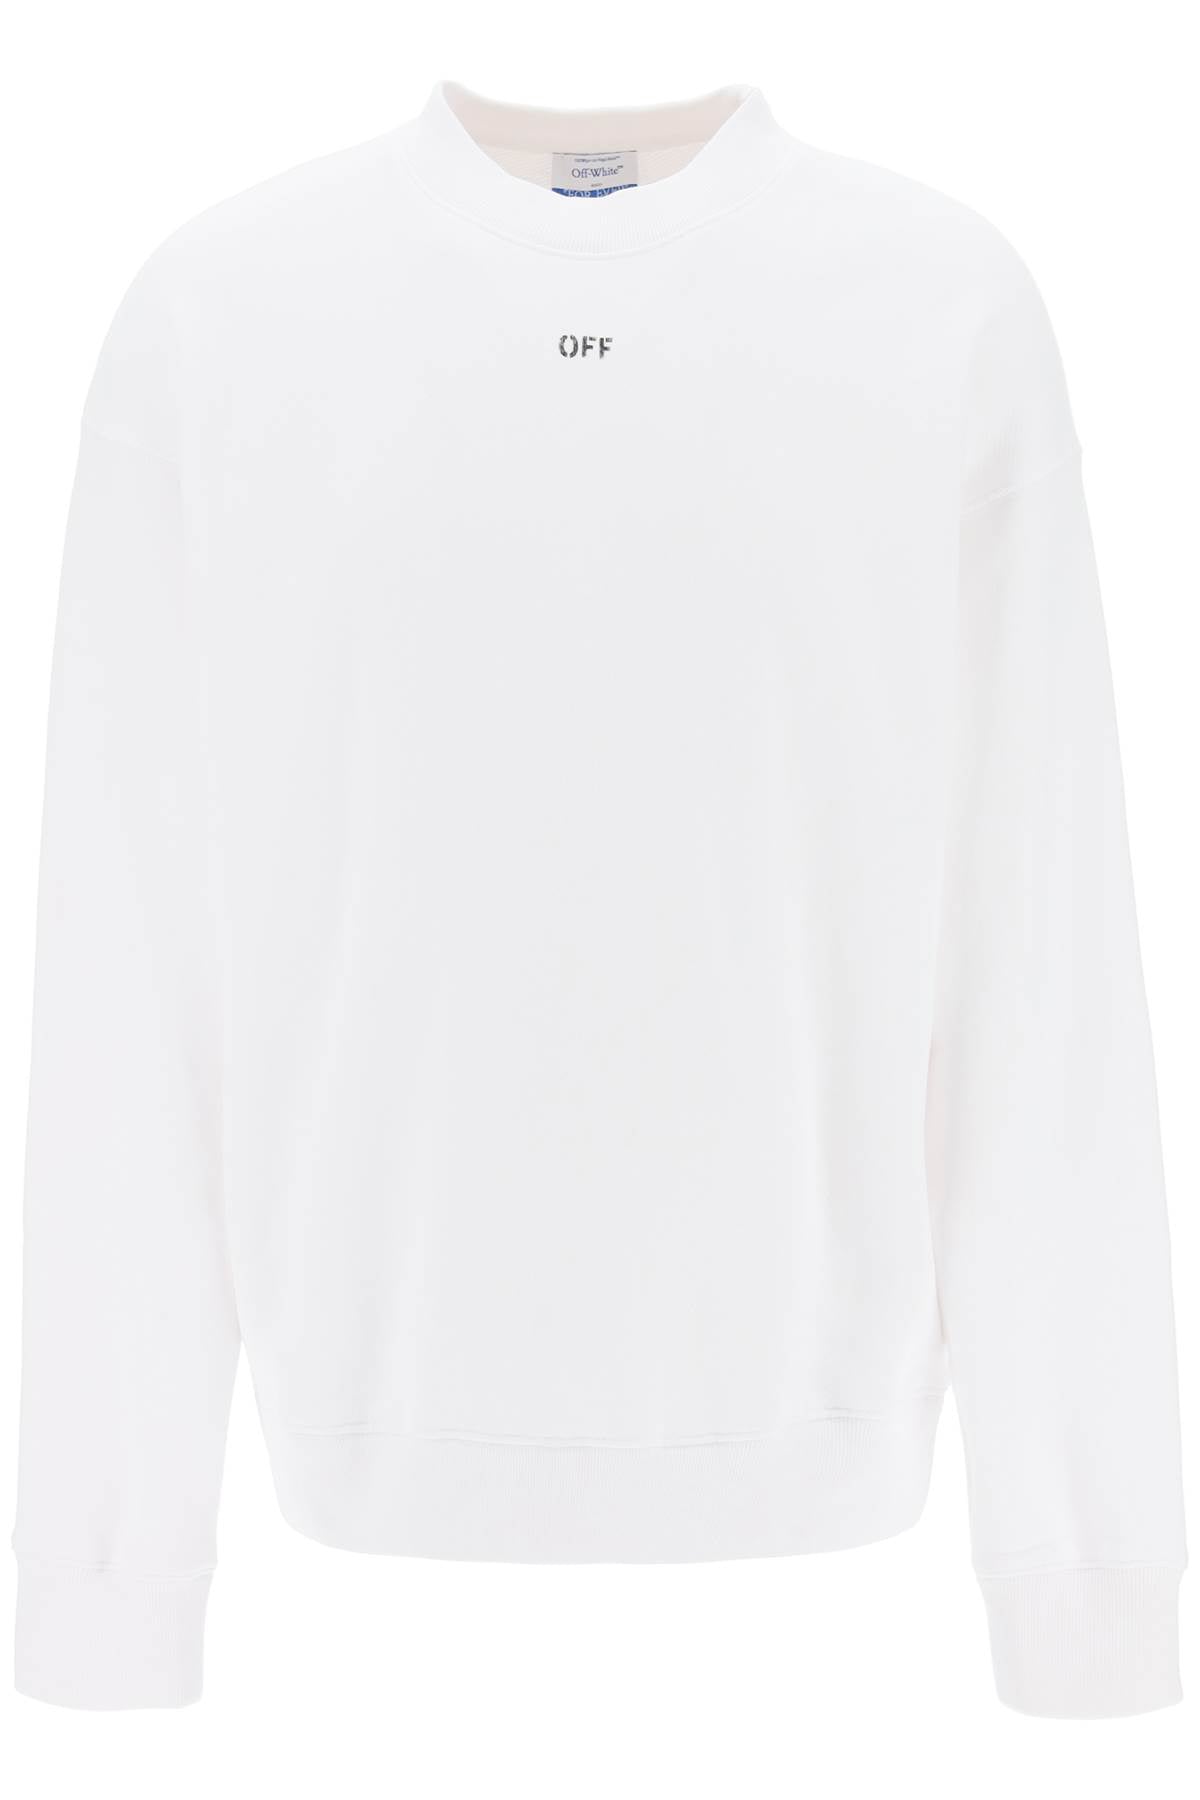 Off-white skate sweatshirt with off logo OMBA054C99FLE006 WHITE BLACK